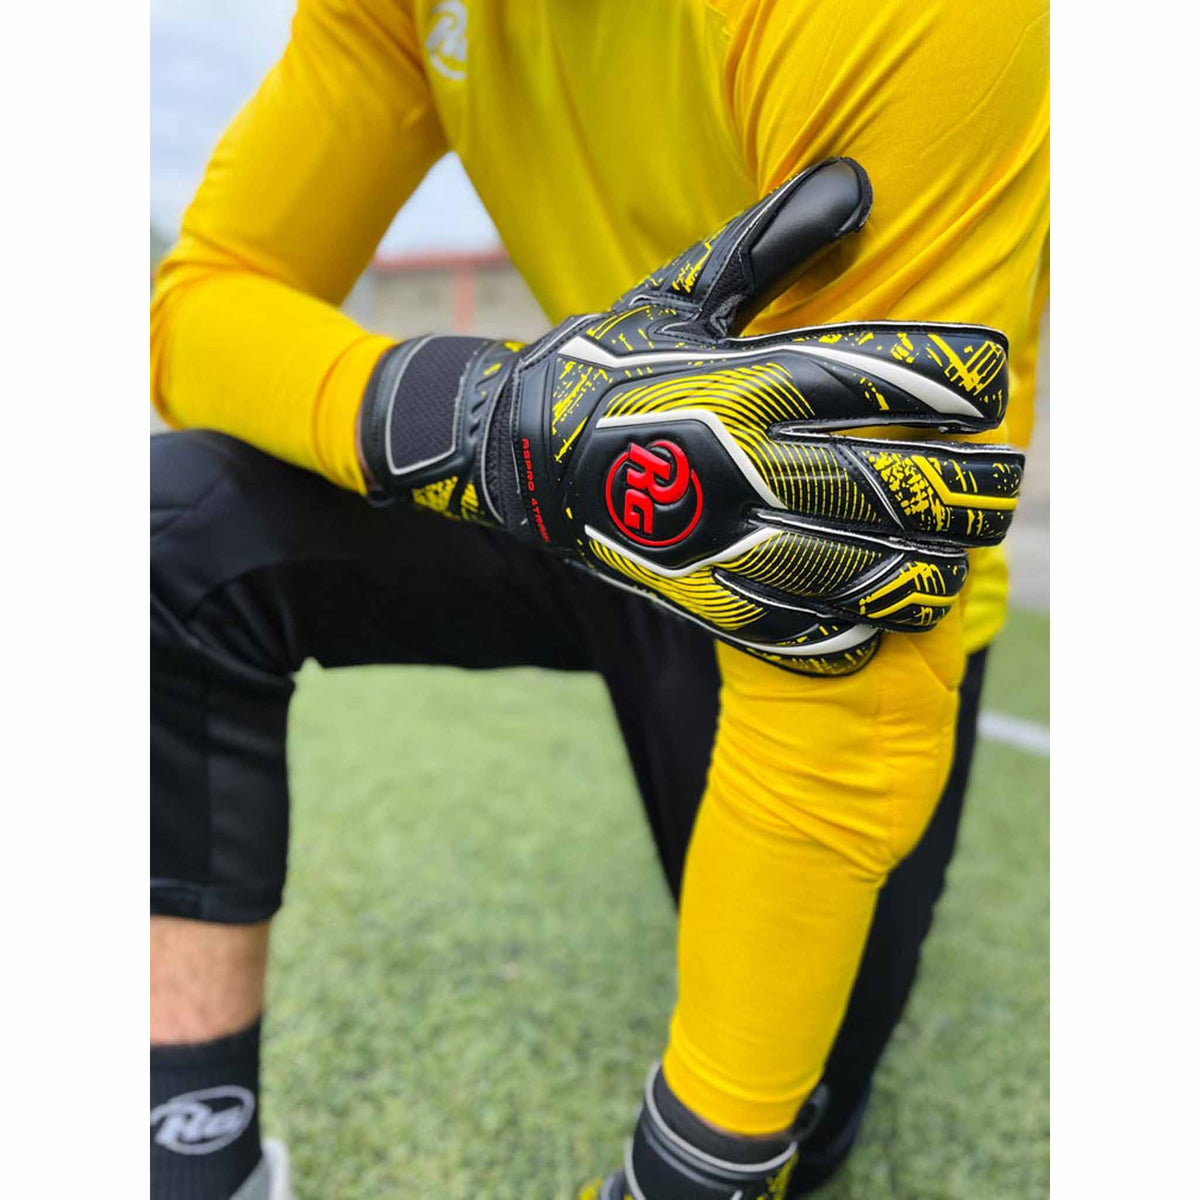 RG Goalkeeper Gloves Aspro 4Train gants de gardien de but de soccer live 5- Noir / Jaune